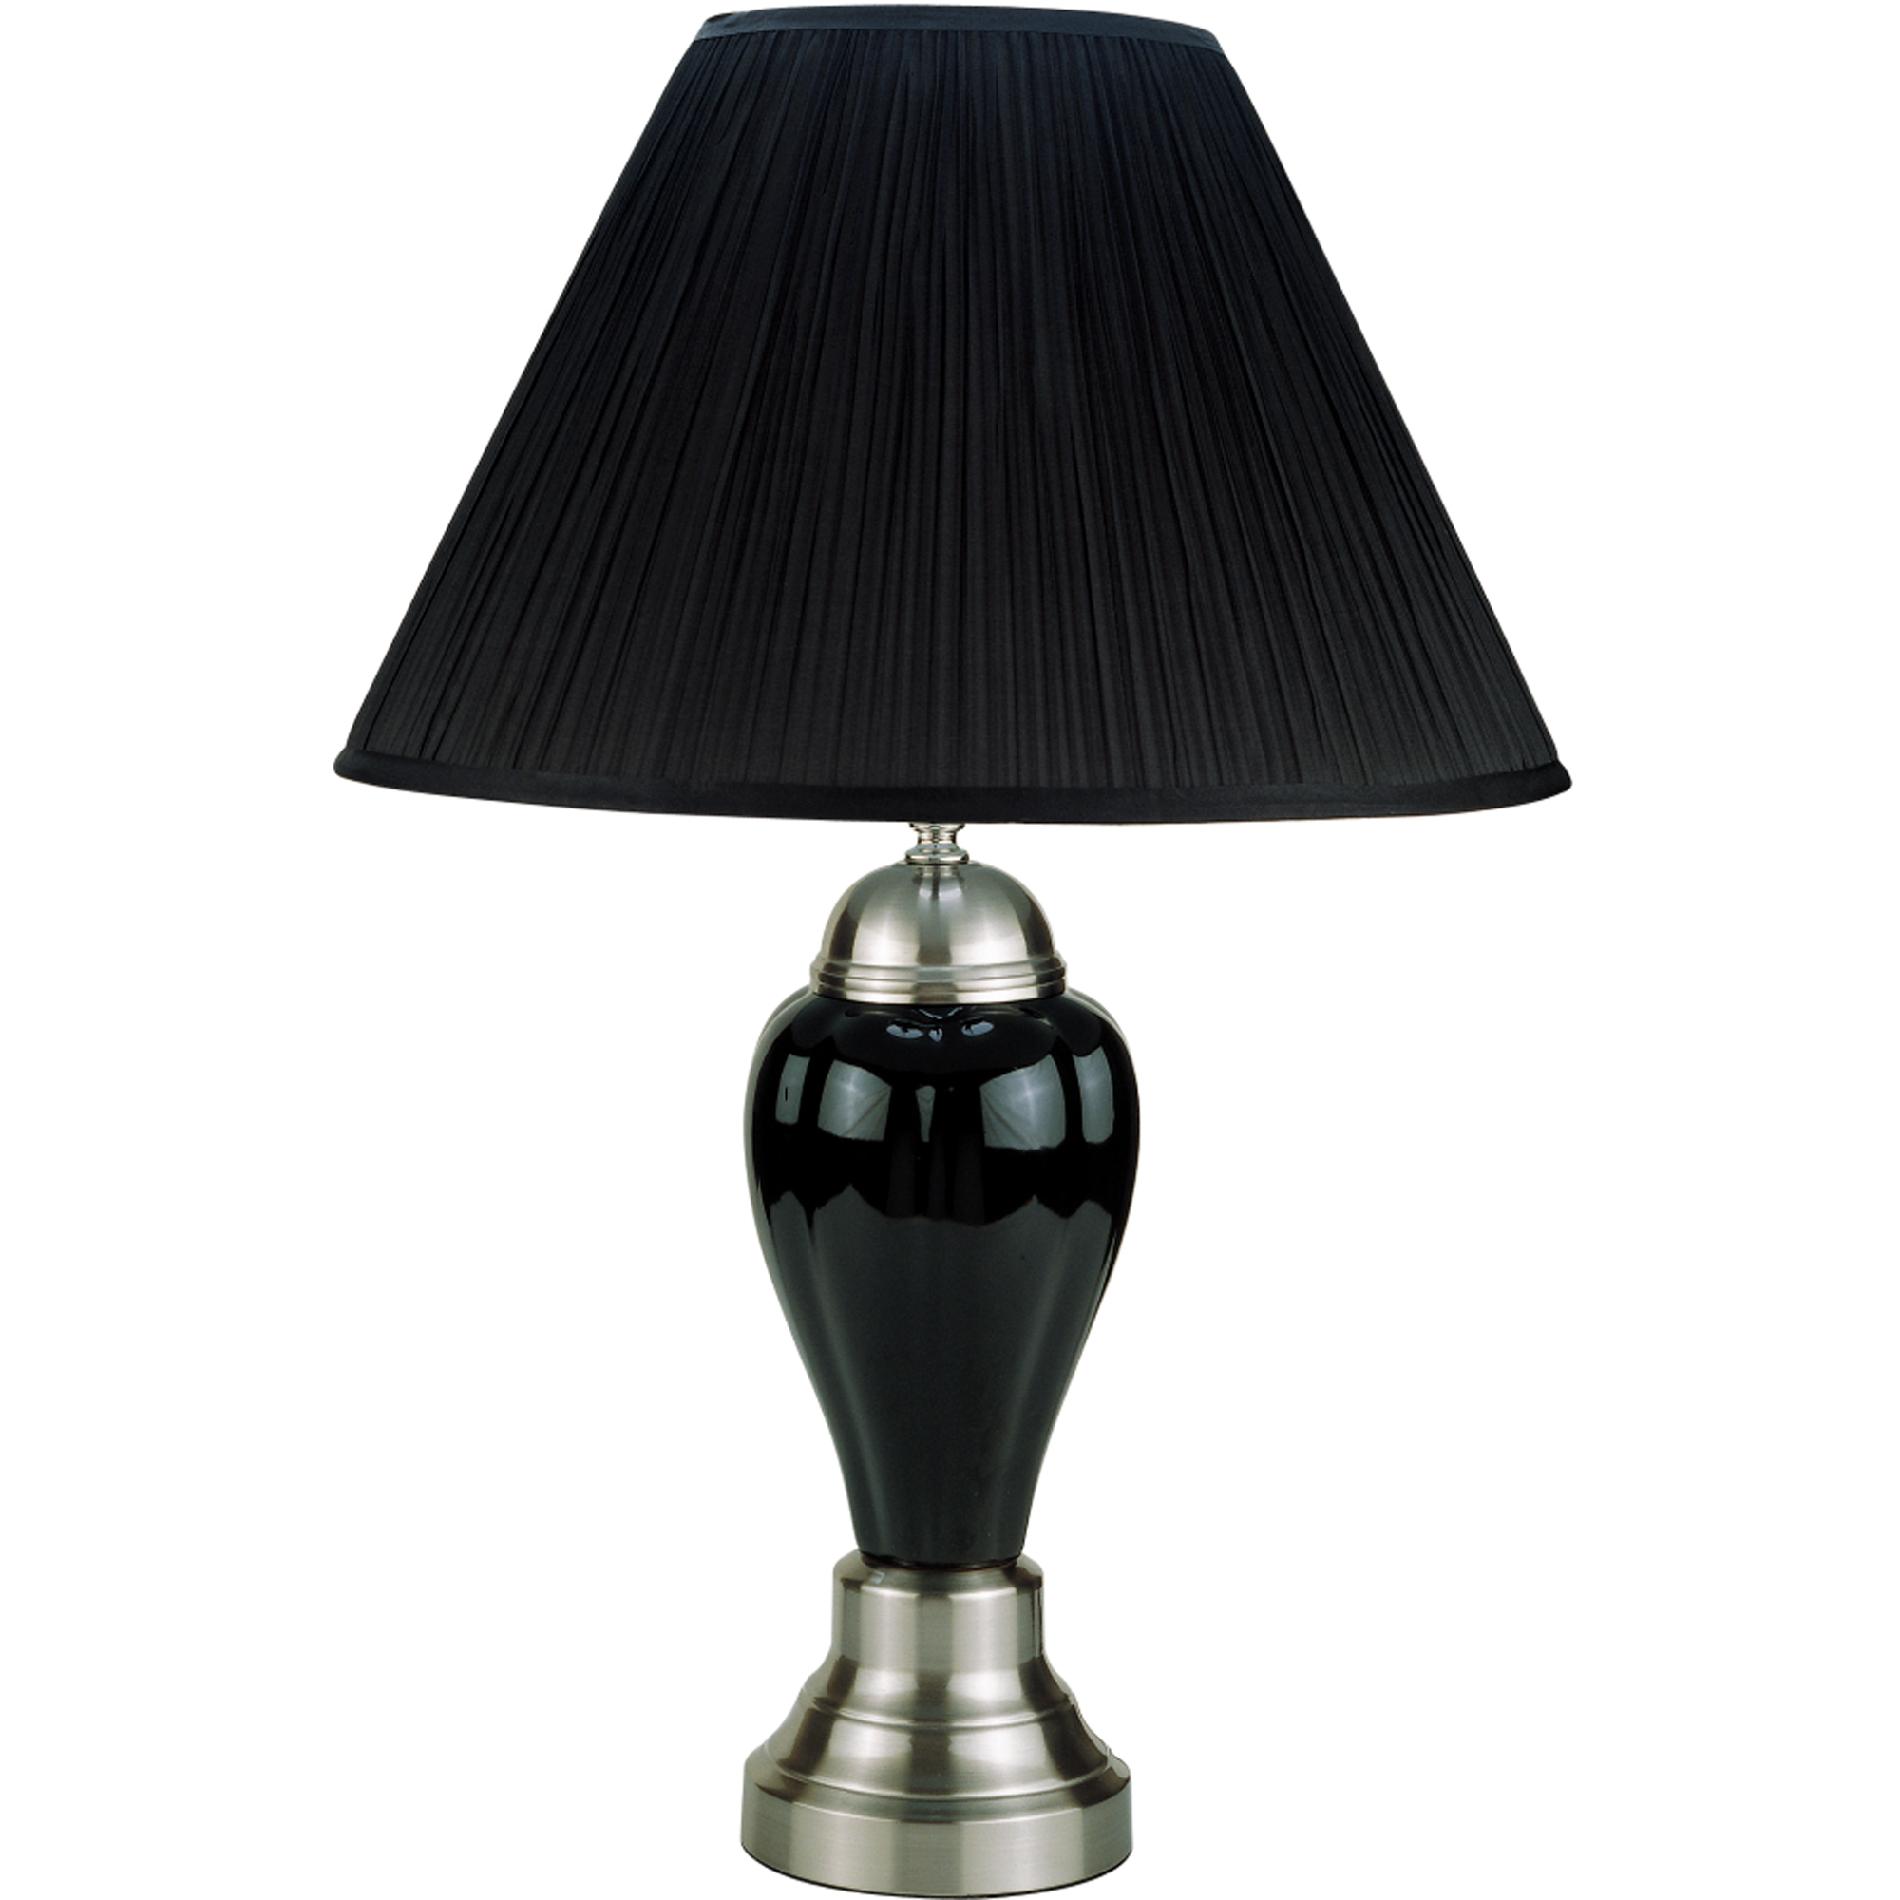 Ore International 27" Ceramic Table Lamp - Silver/Black